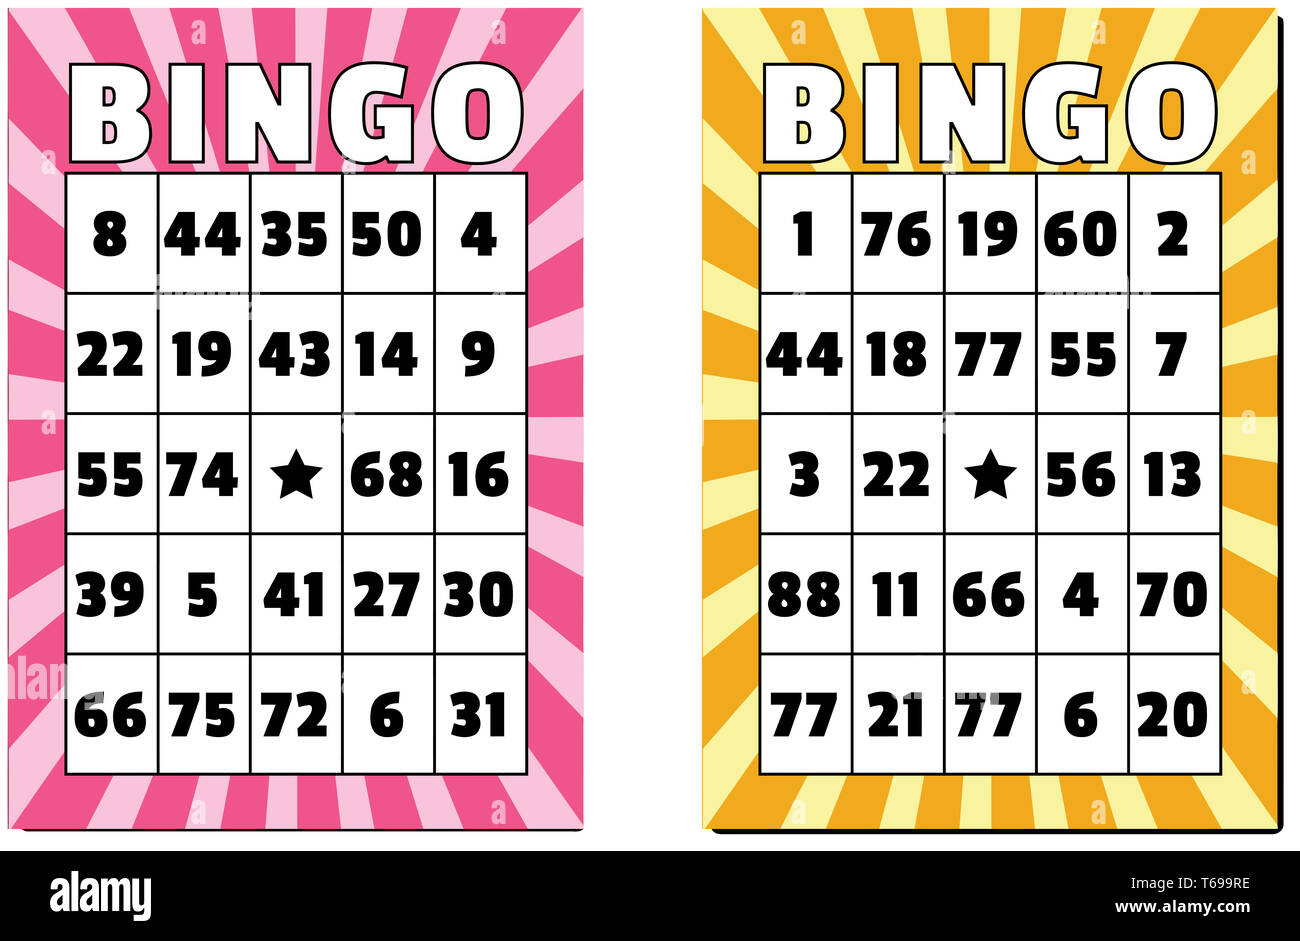 La suerte en el Bingo